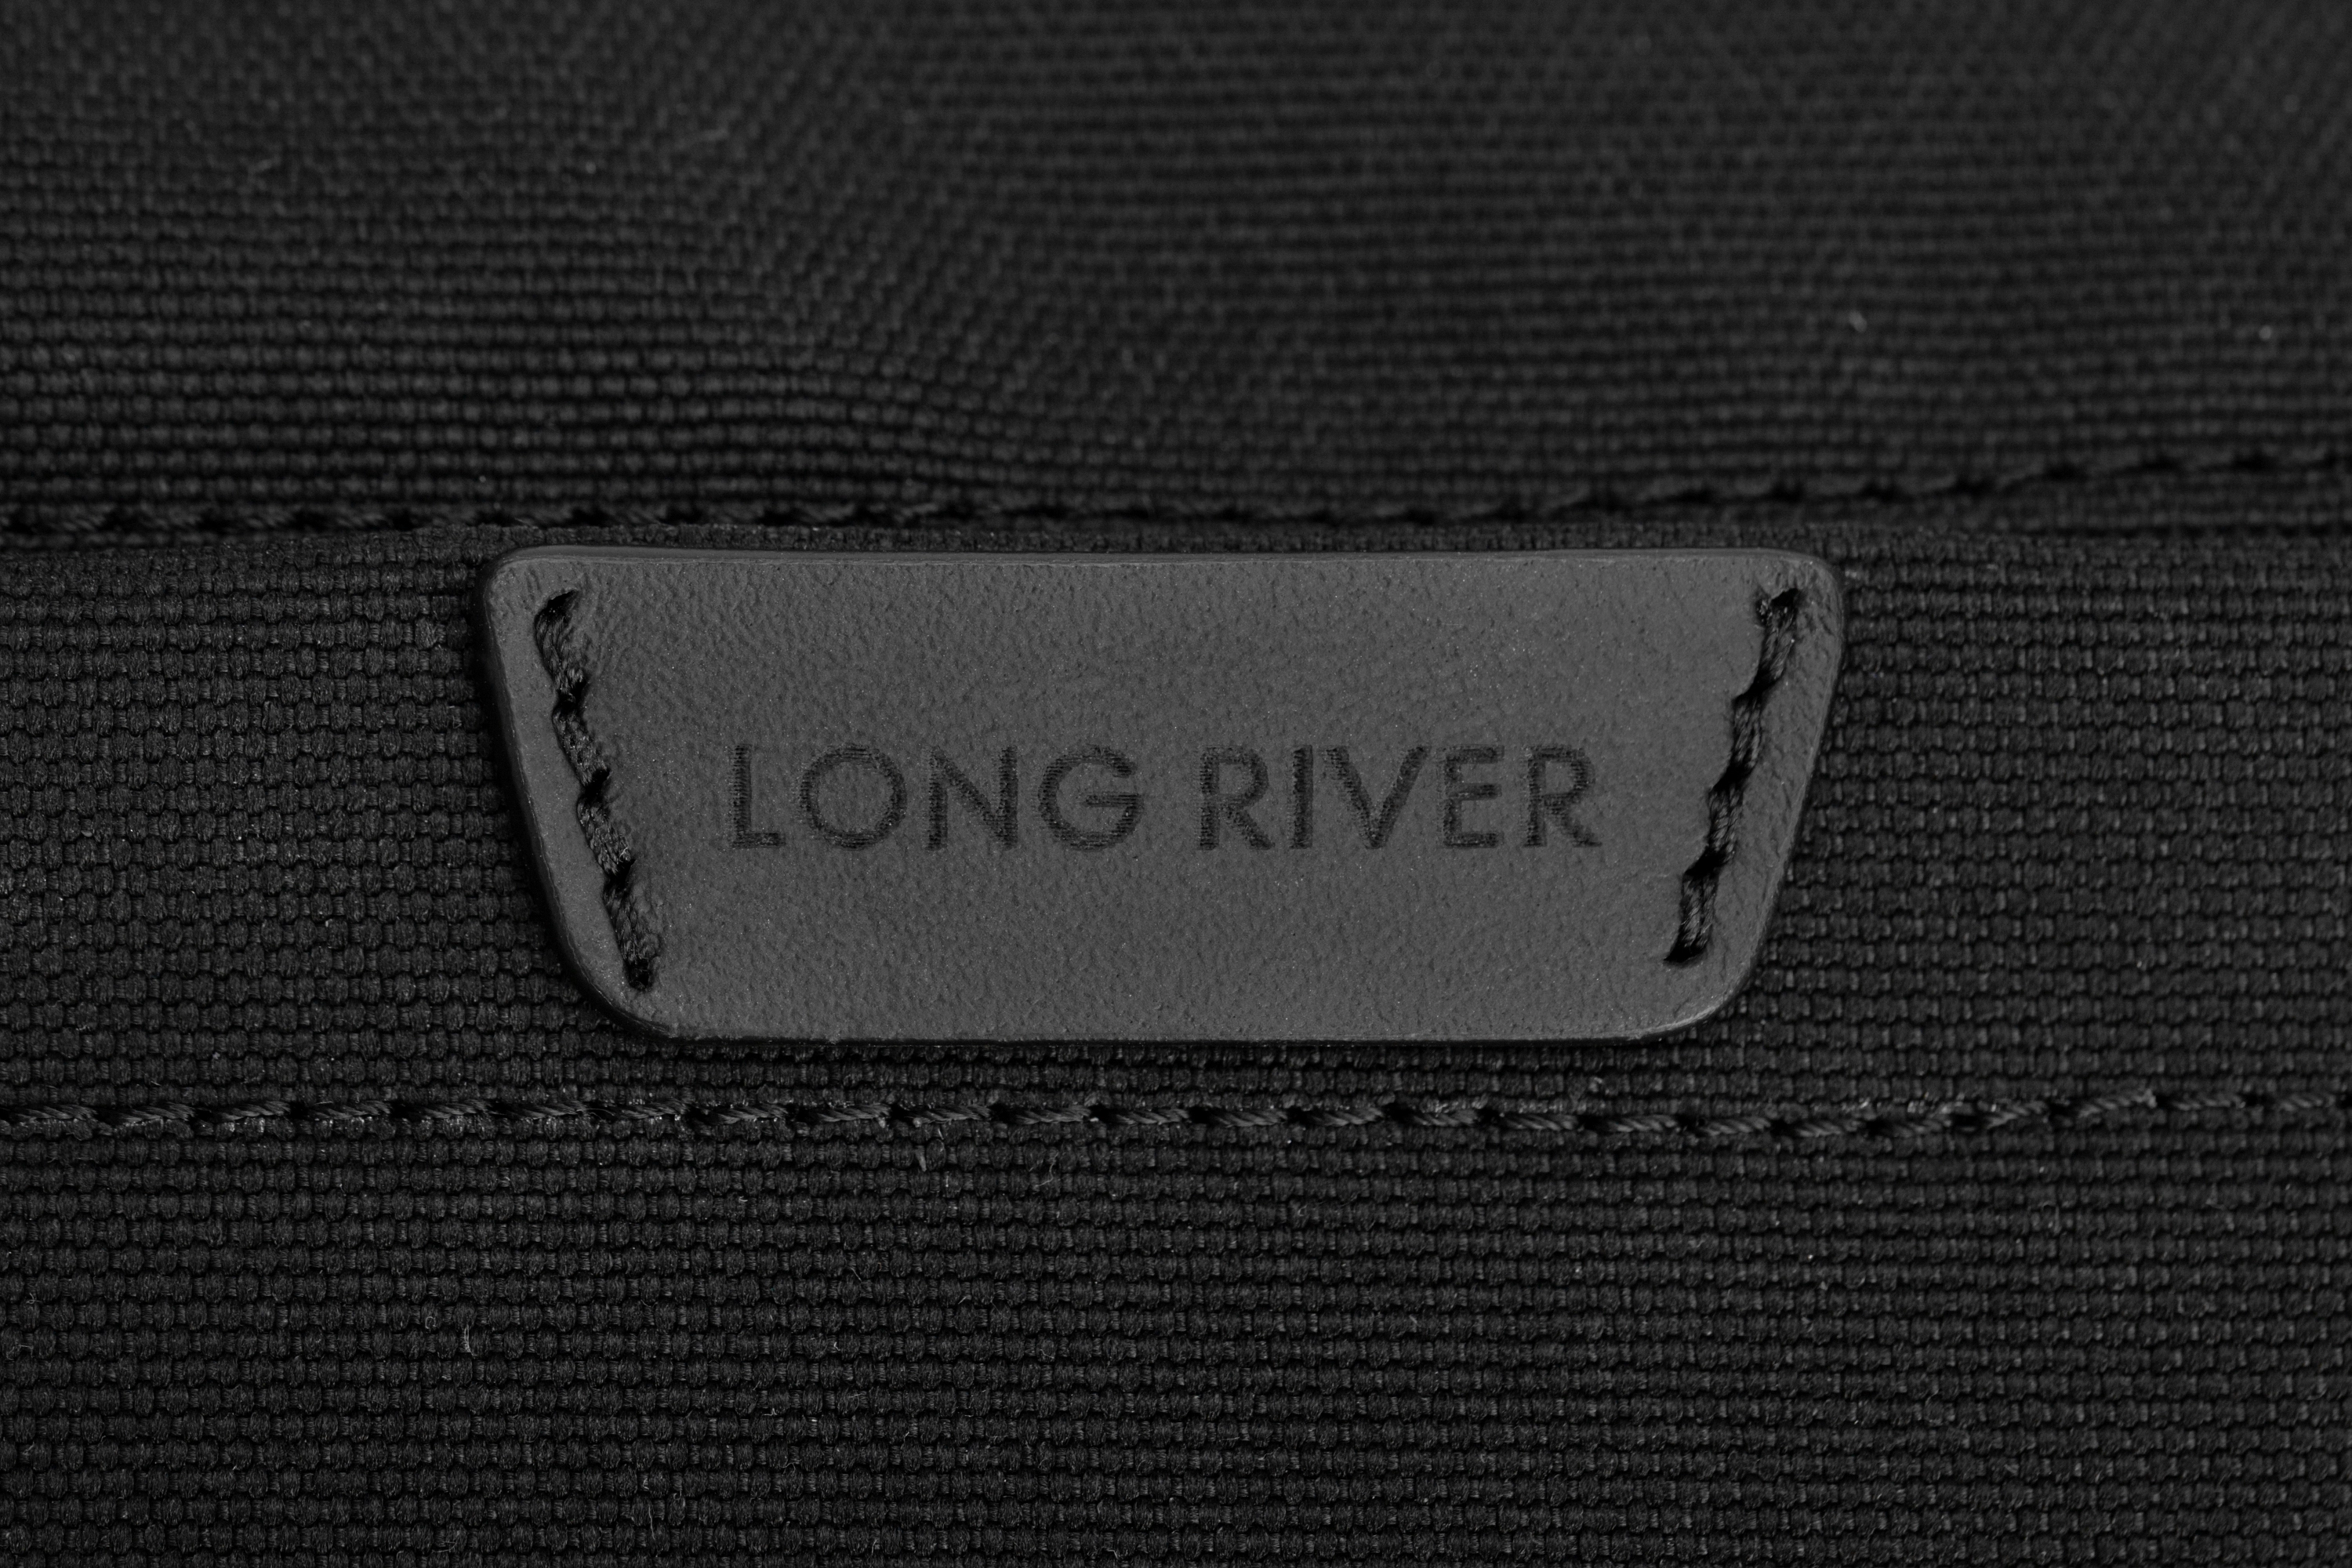 long river